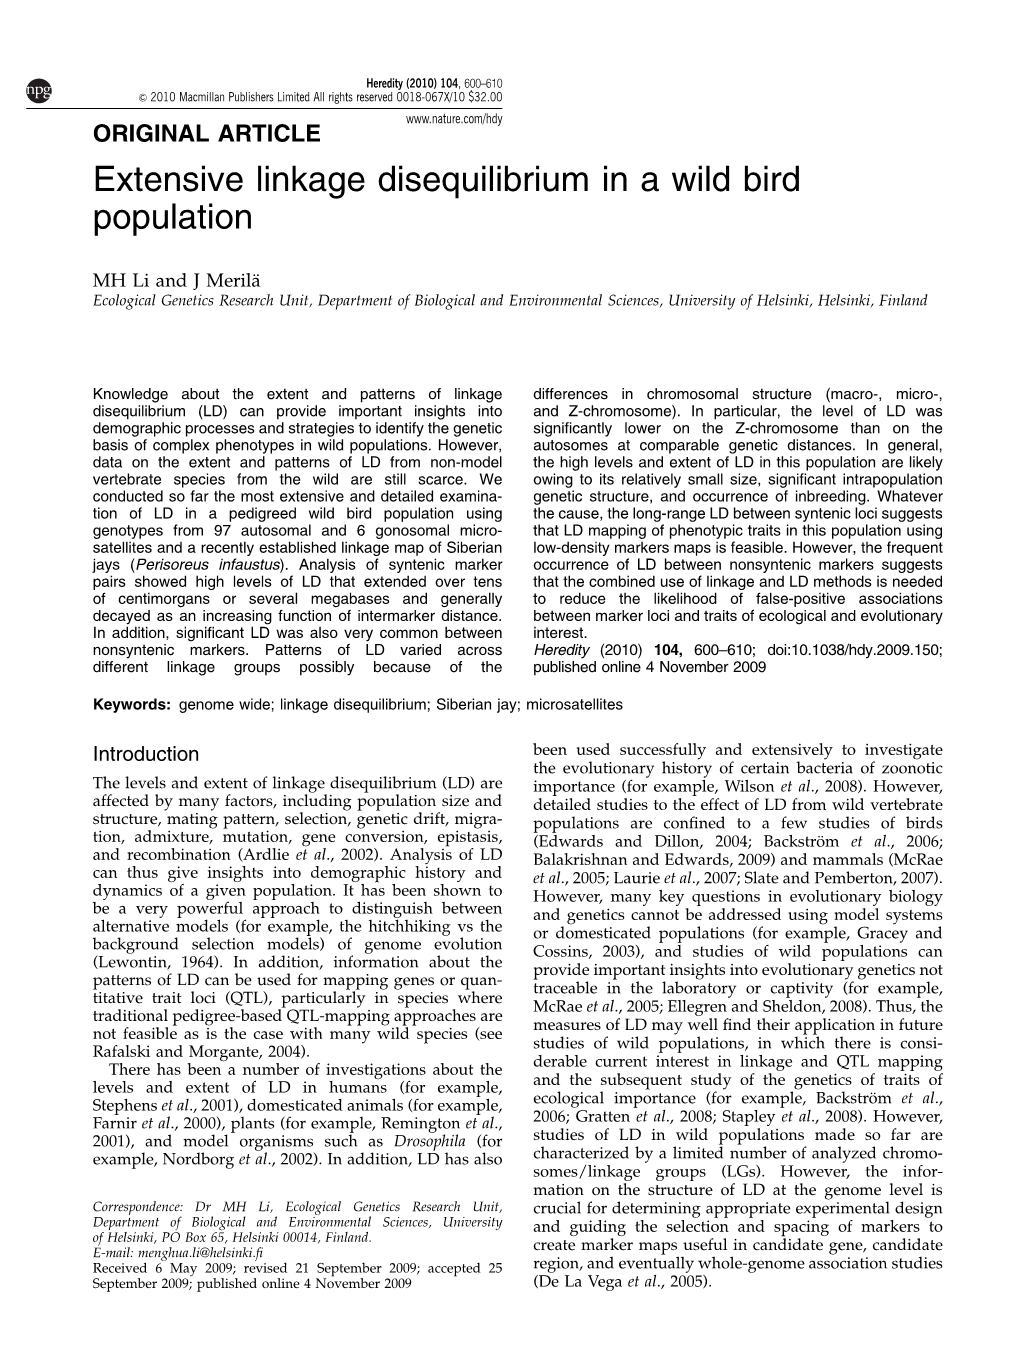 Extensive Linkage Disequilibrium in a Wild Bird Population